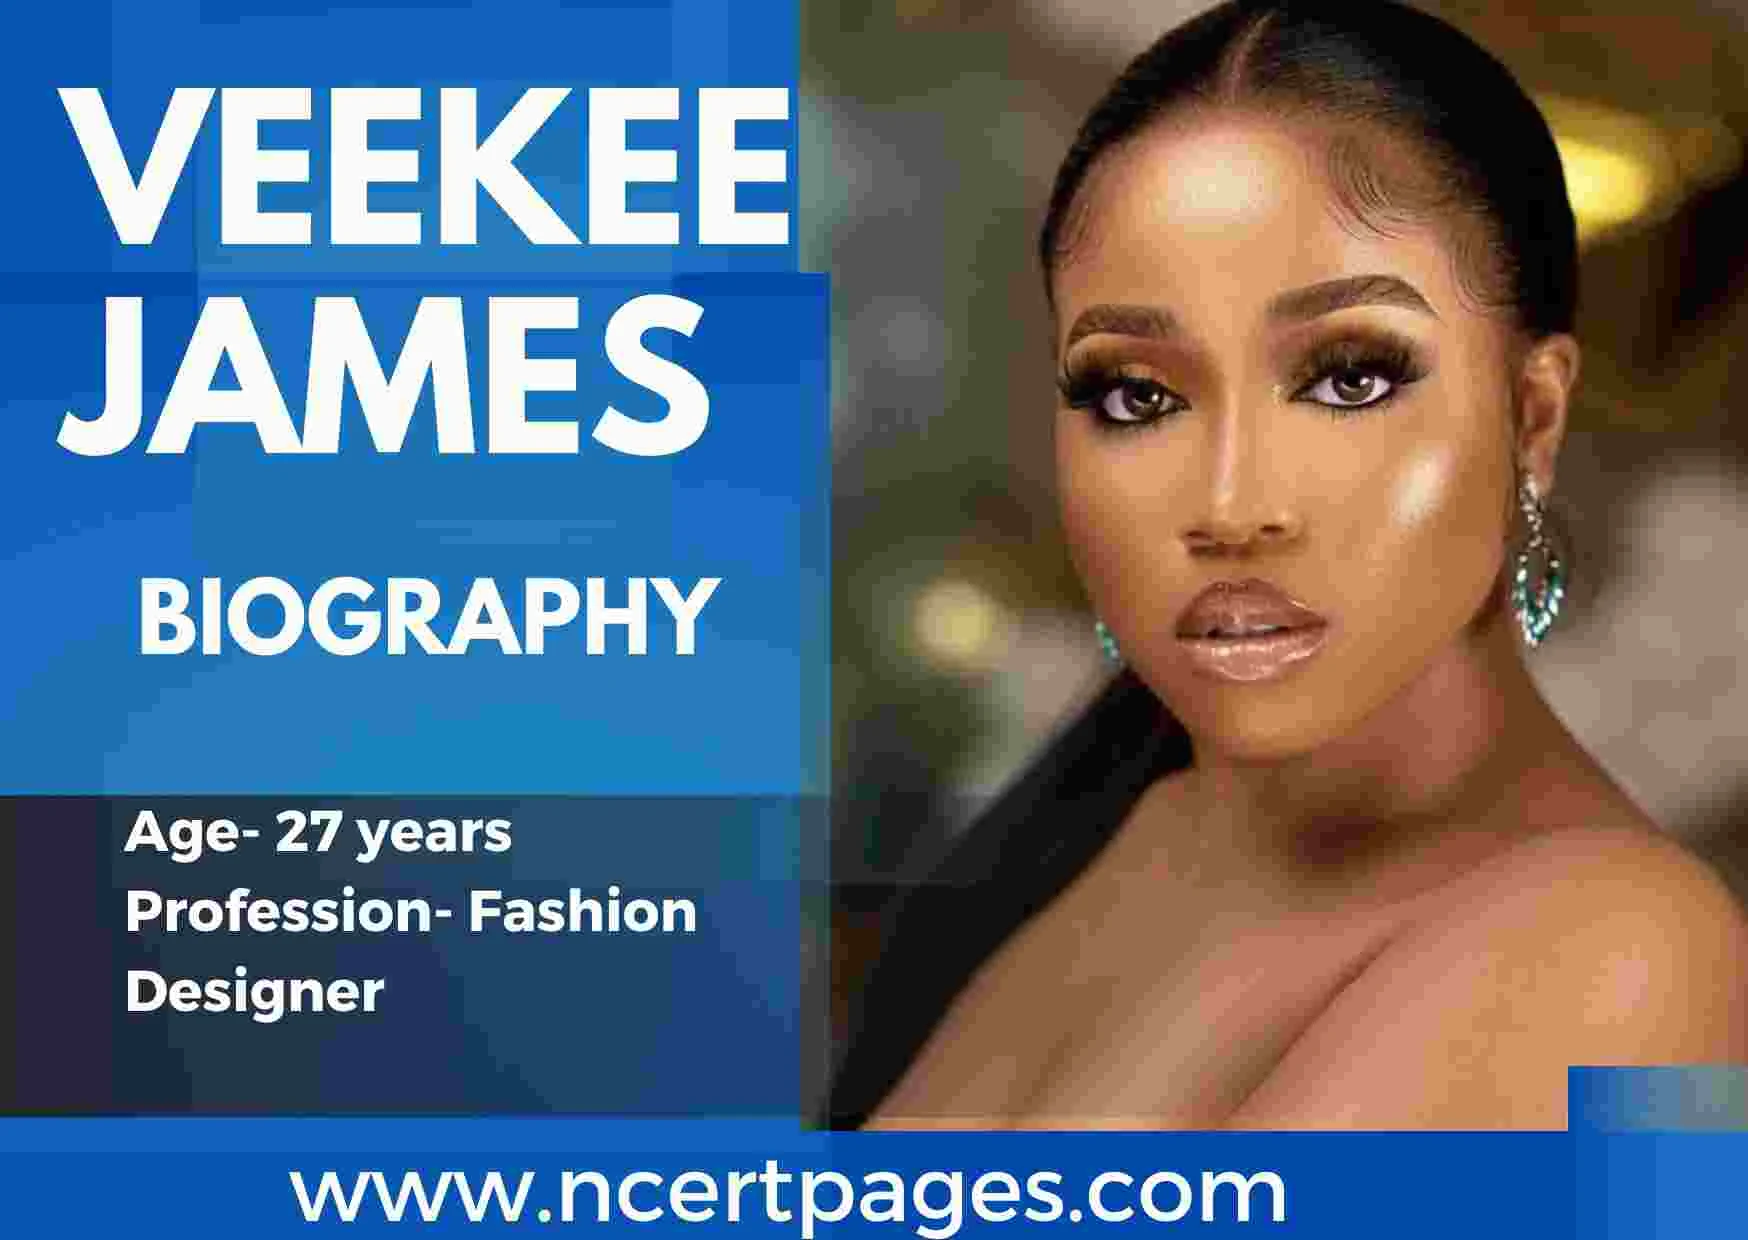 Veekee James Biography Fashion Designer, Age profile Image